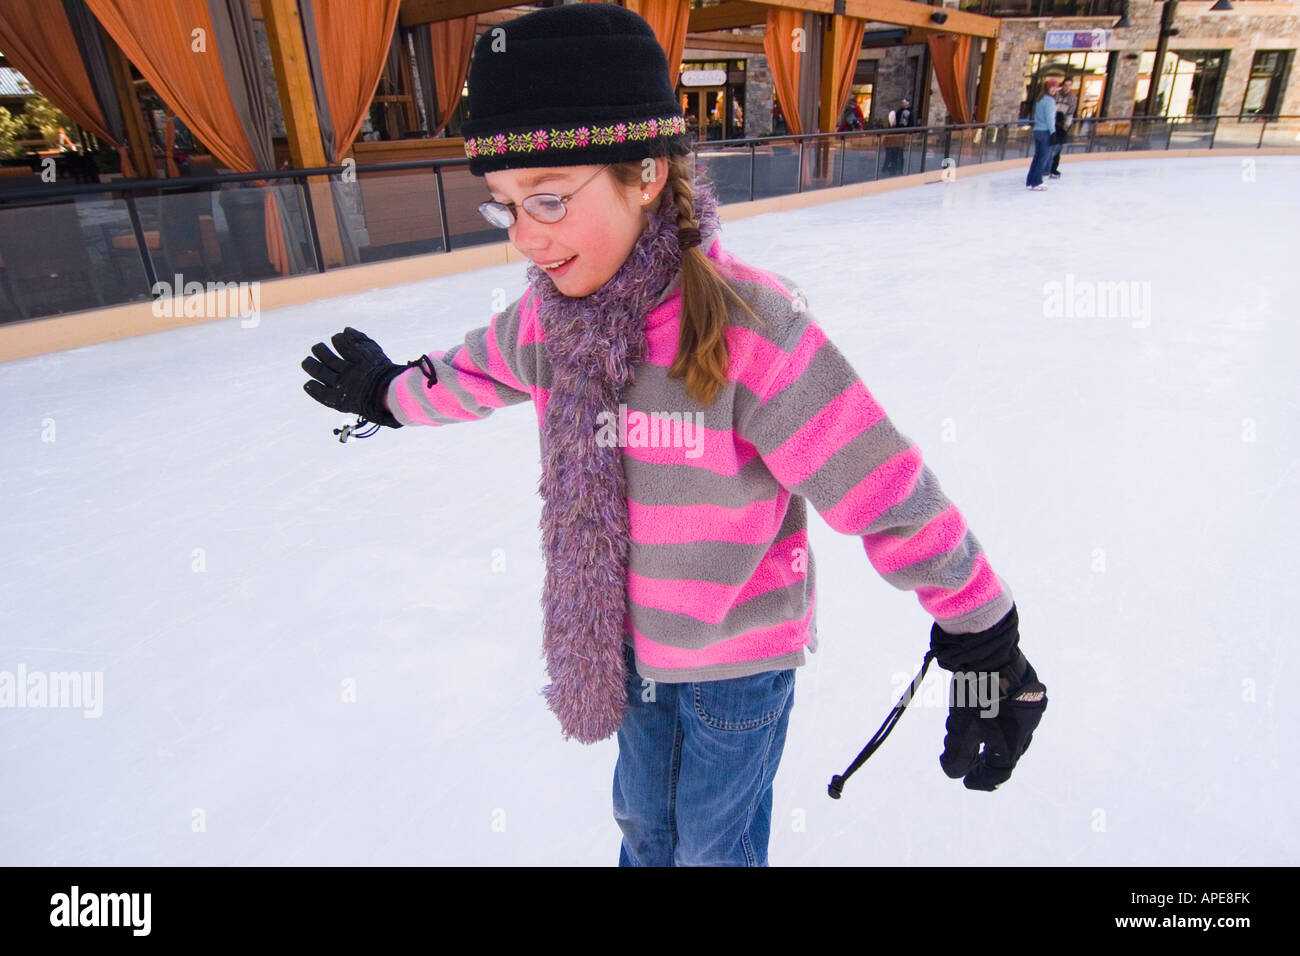 A young girl ice skating at Northstar ski resort near Lake Tahoe in California Stock Photo